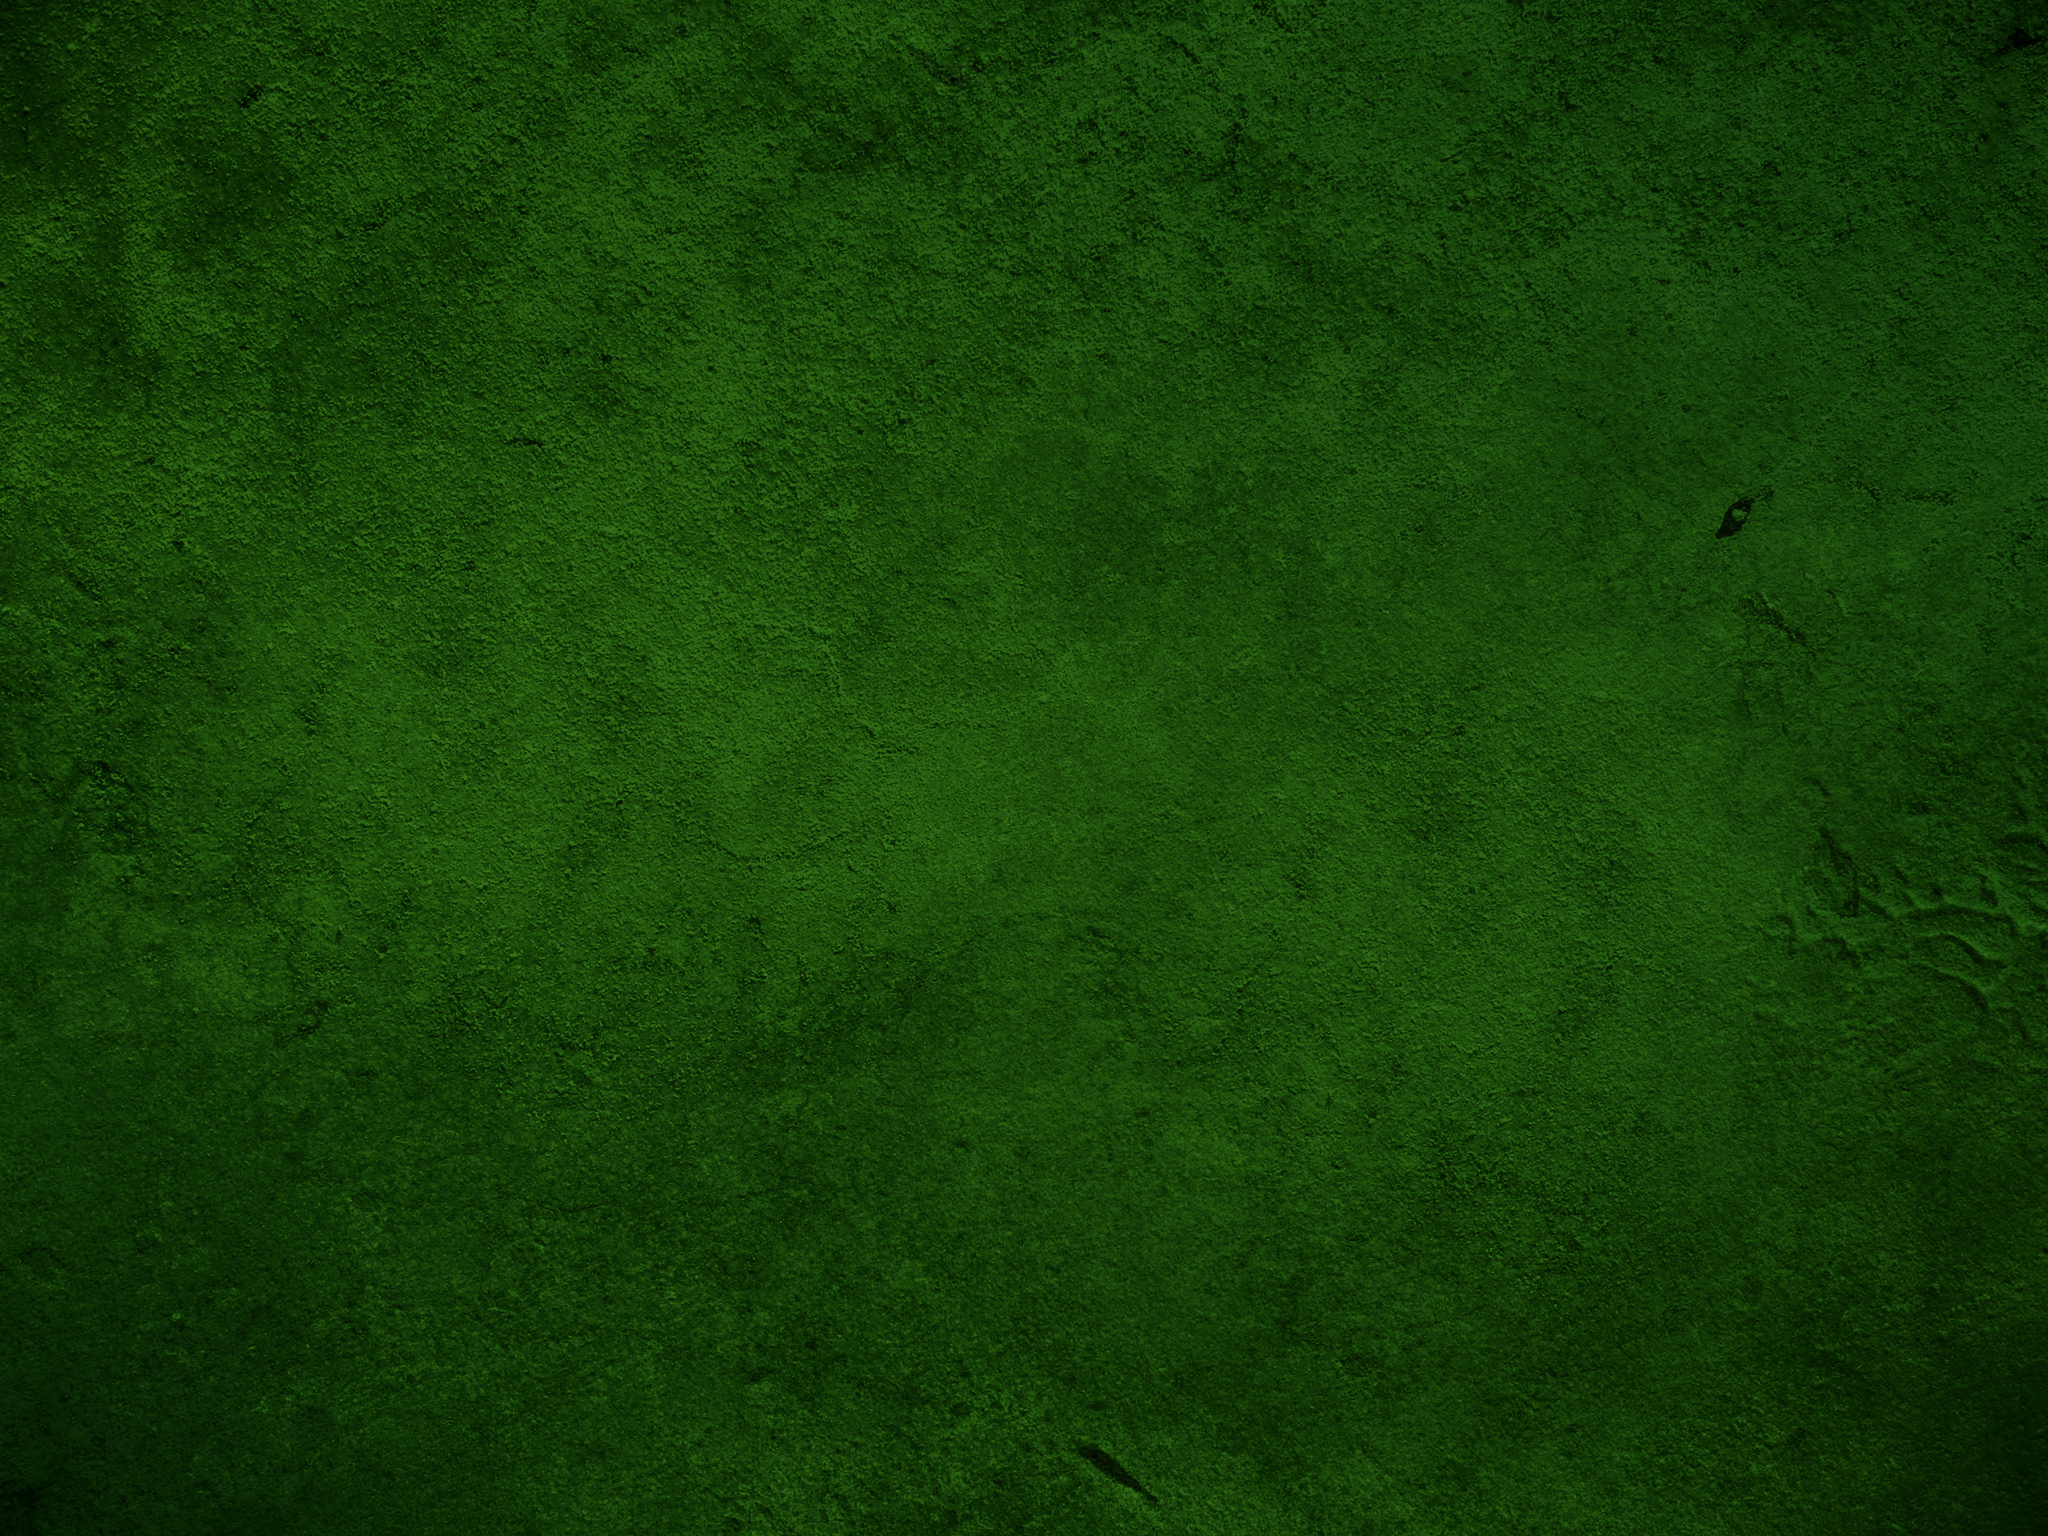 emerald green wallpaper,green,grass,leaf,plant,artificial turf